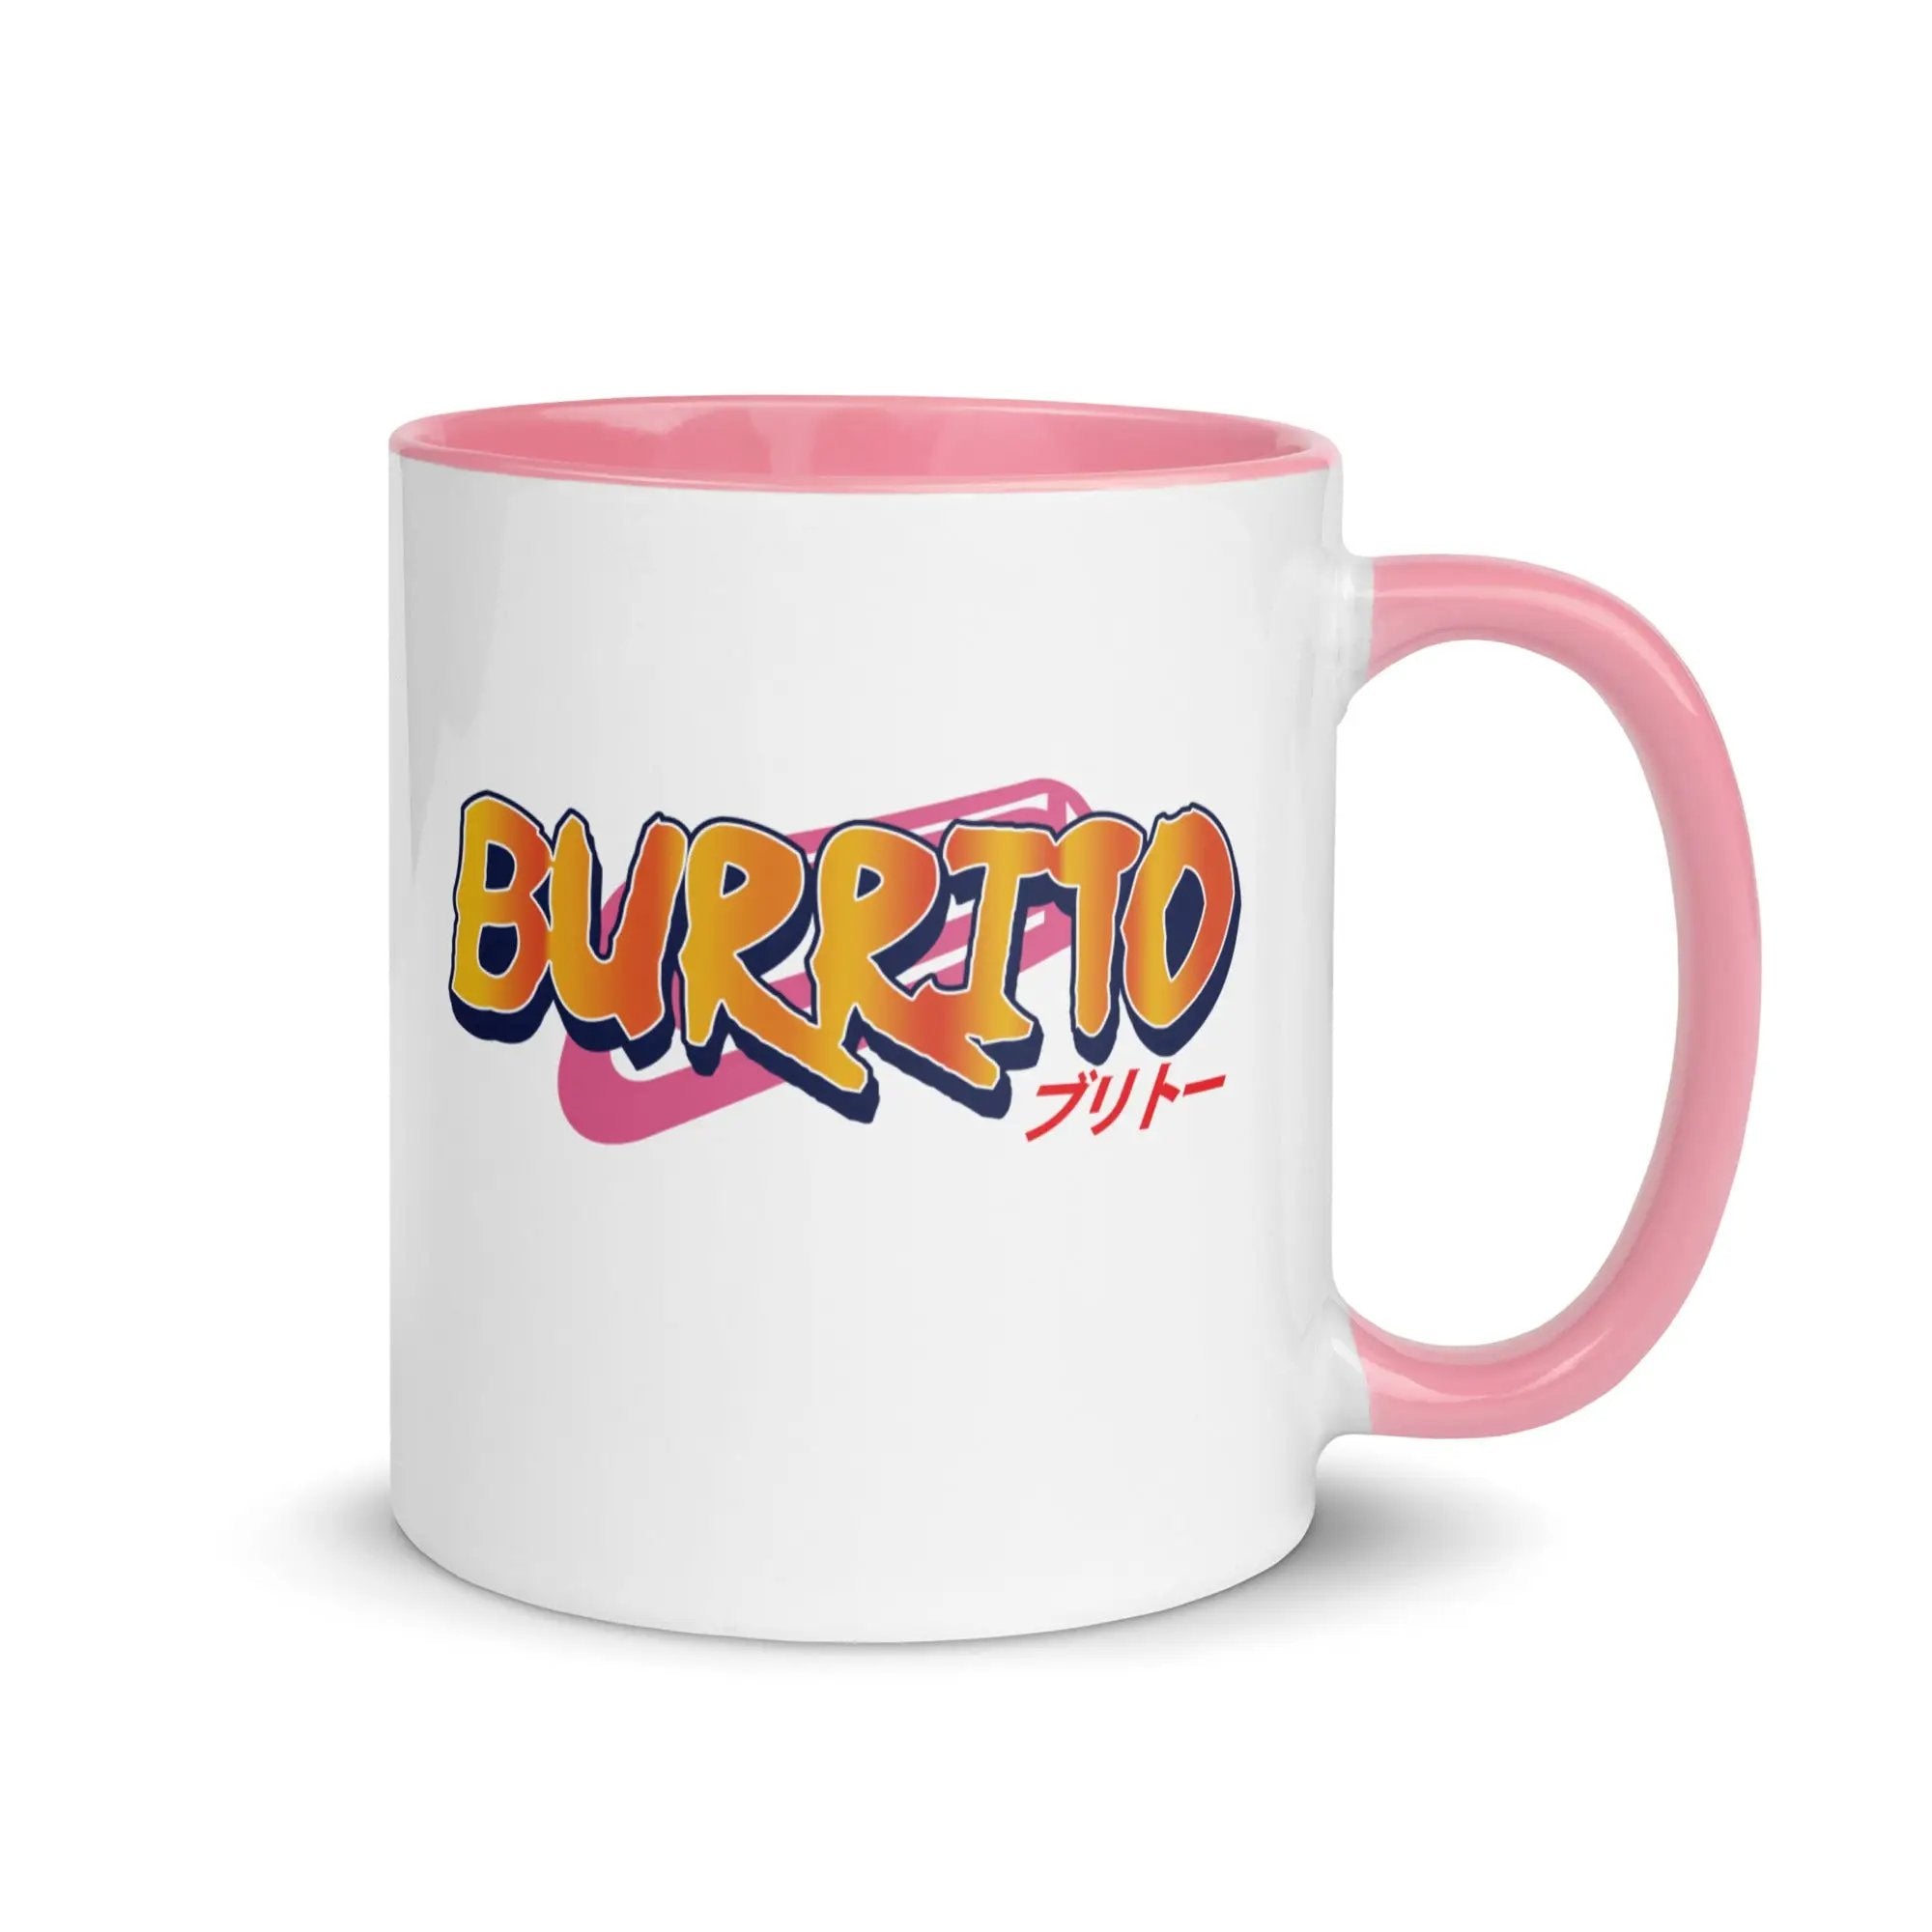 Burrito Mug with Color Inside